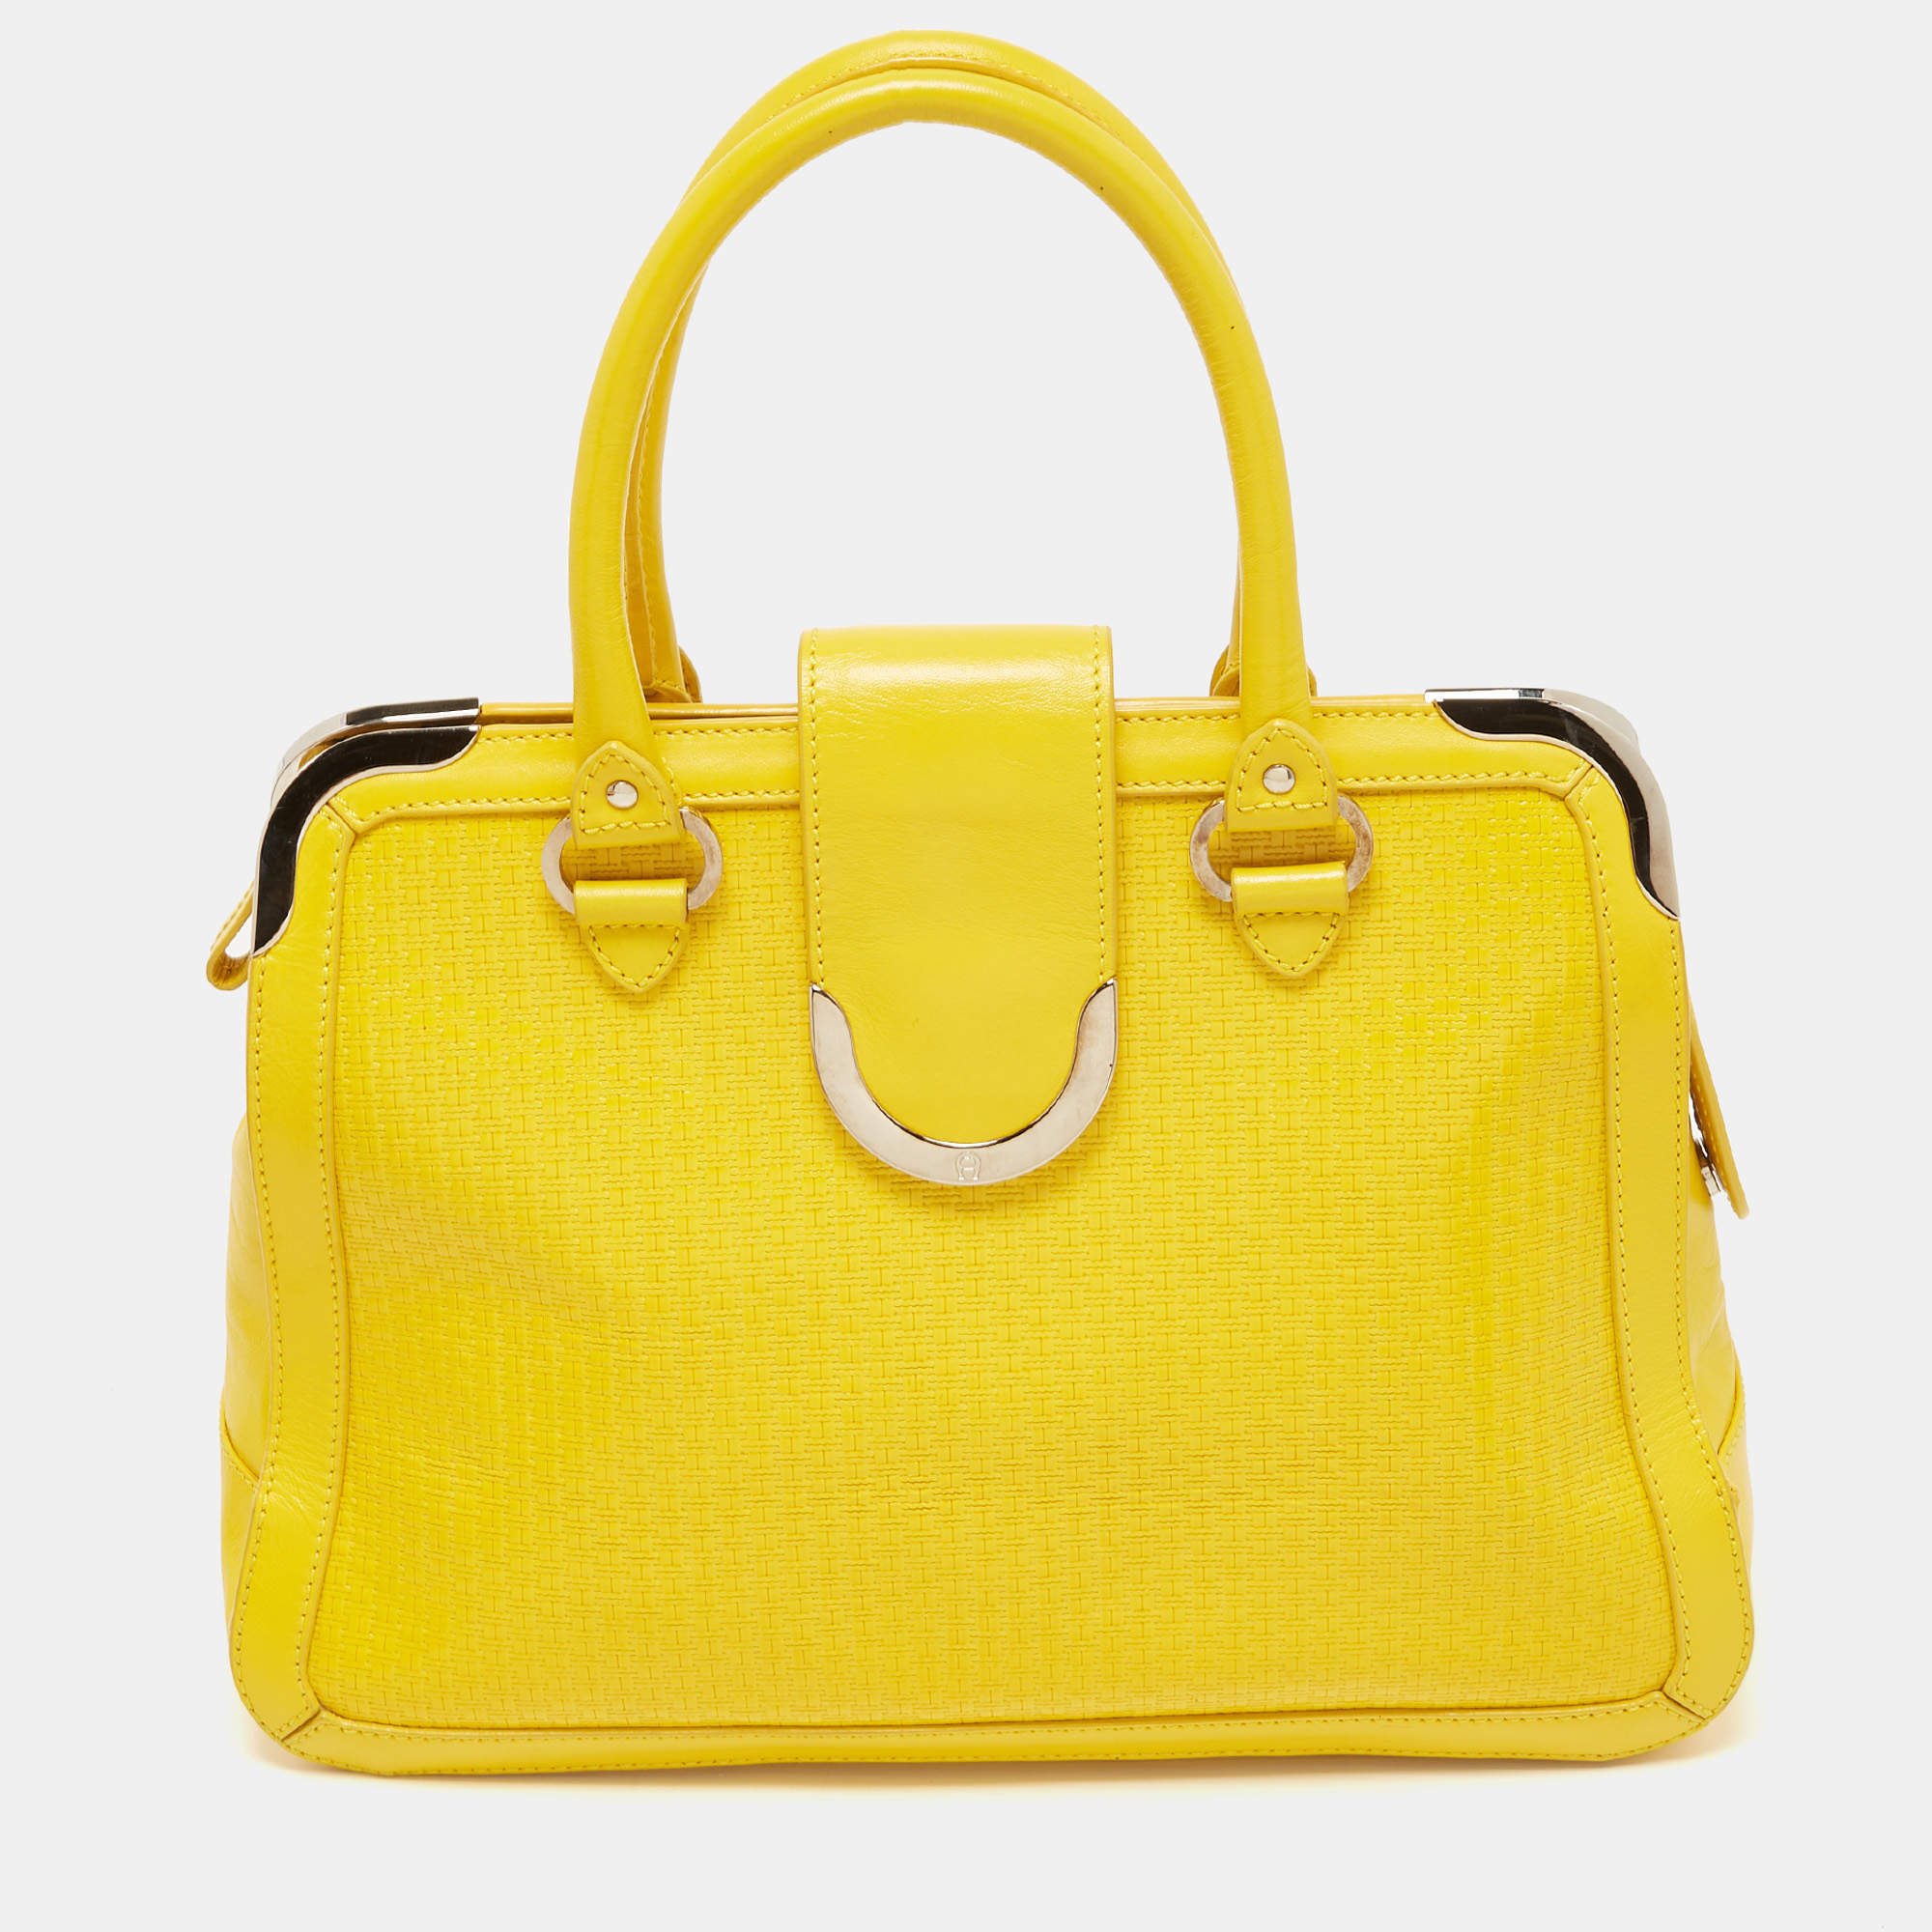 Khadim India launches new range of women's handbags & leather goods